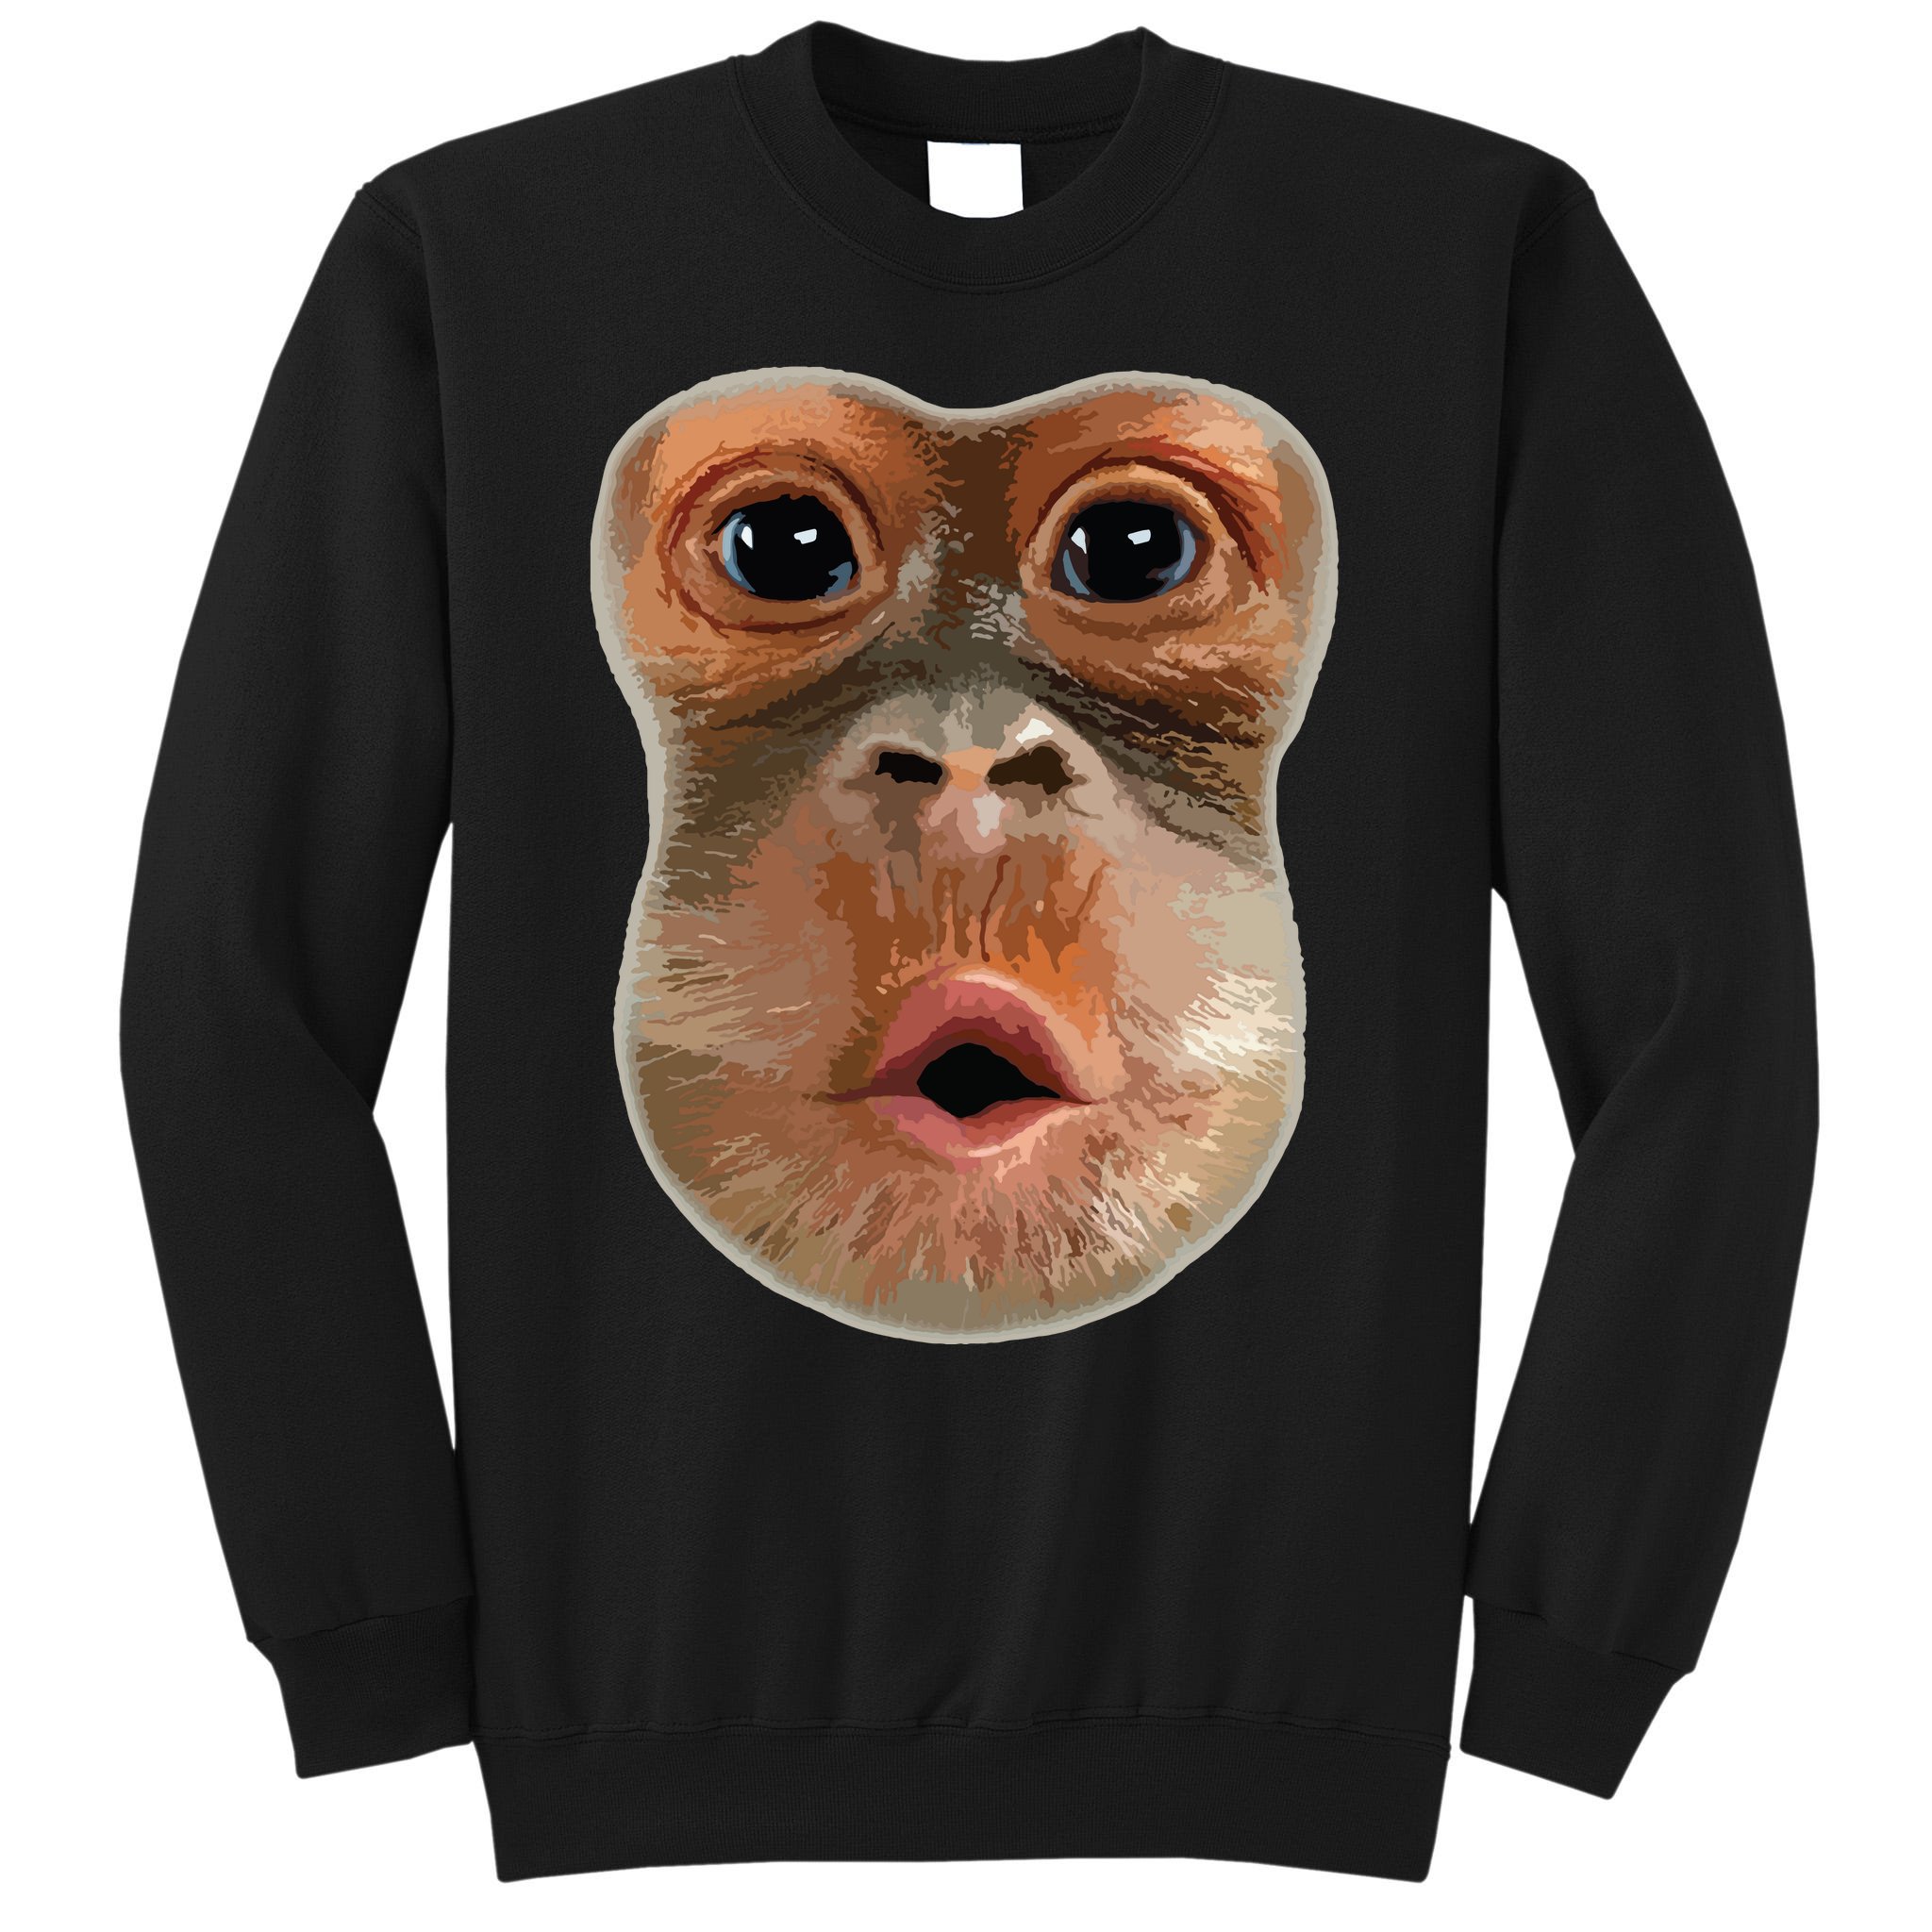 Monkey Stomach Funny Meme Cool Trending Viral Video T-Shirt S-5XL